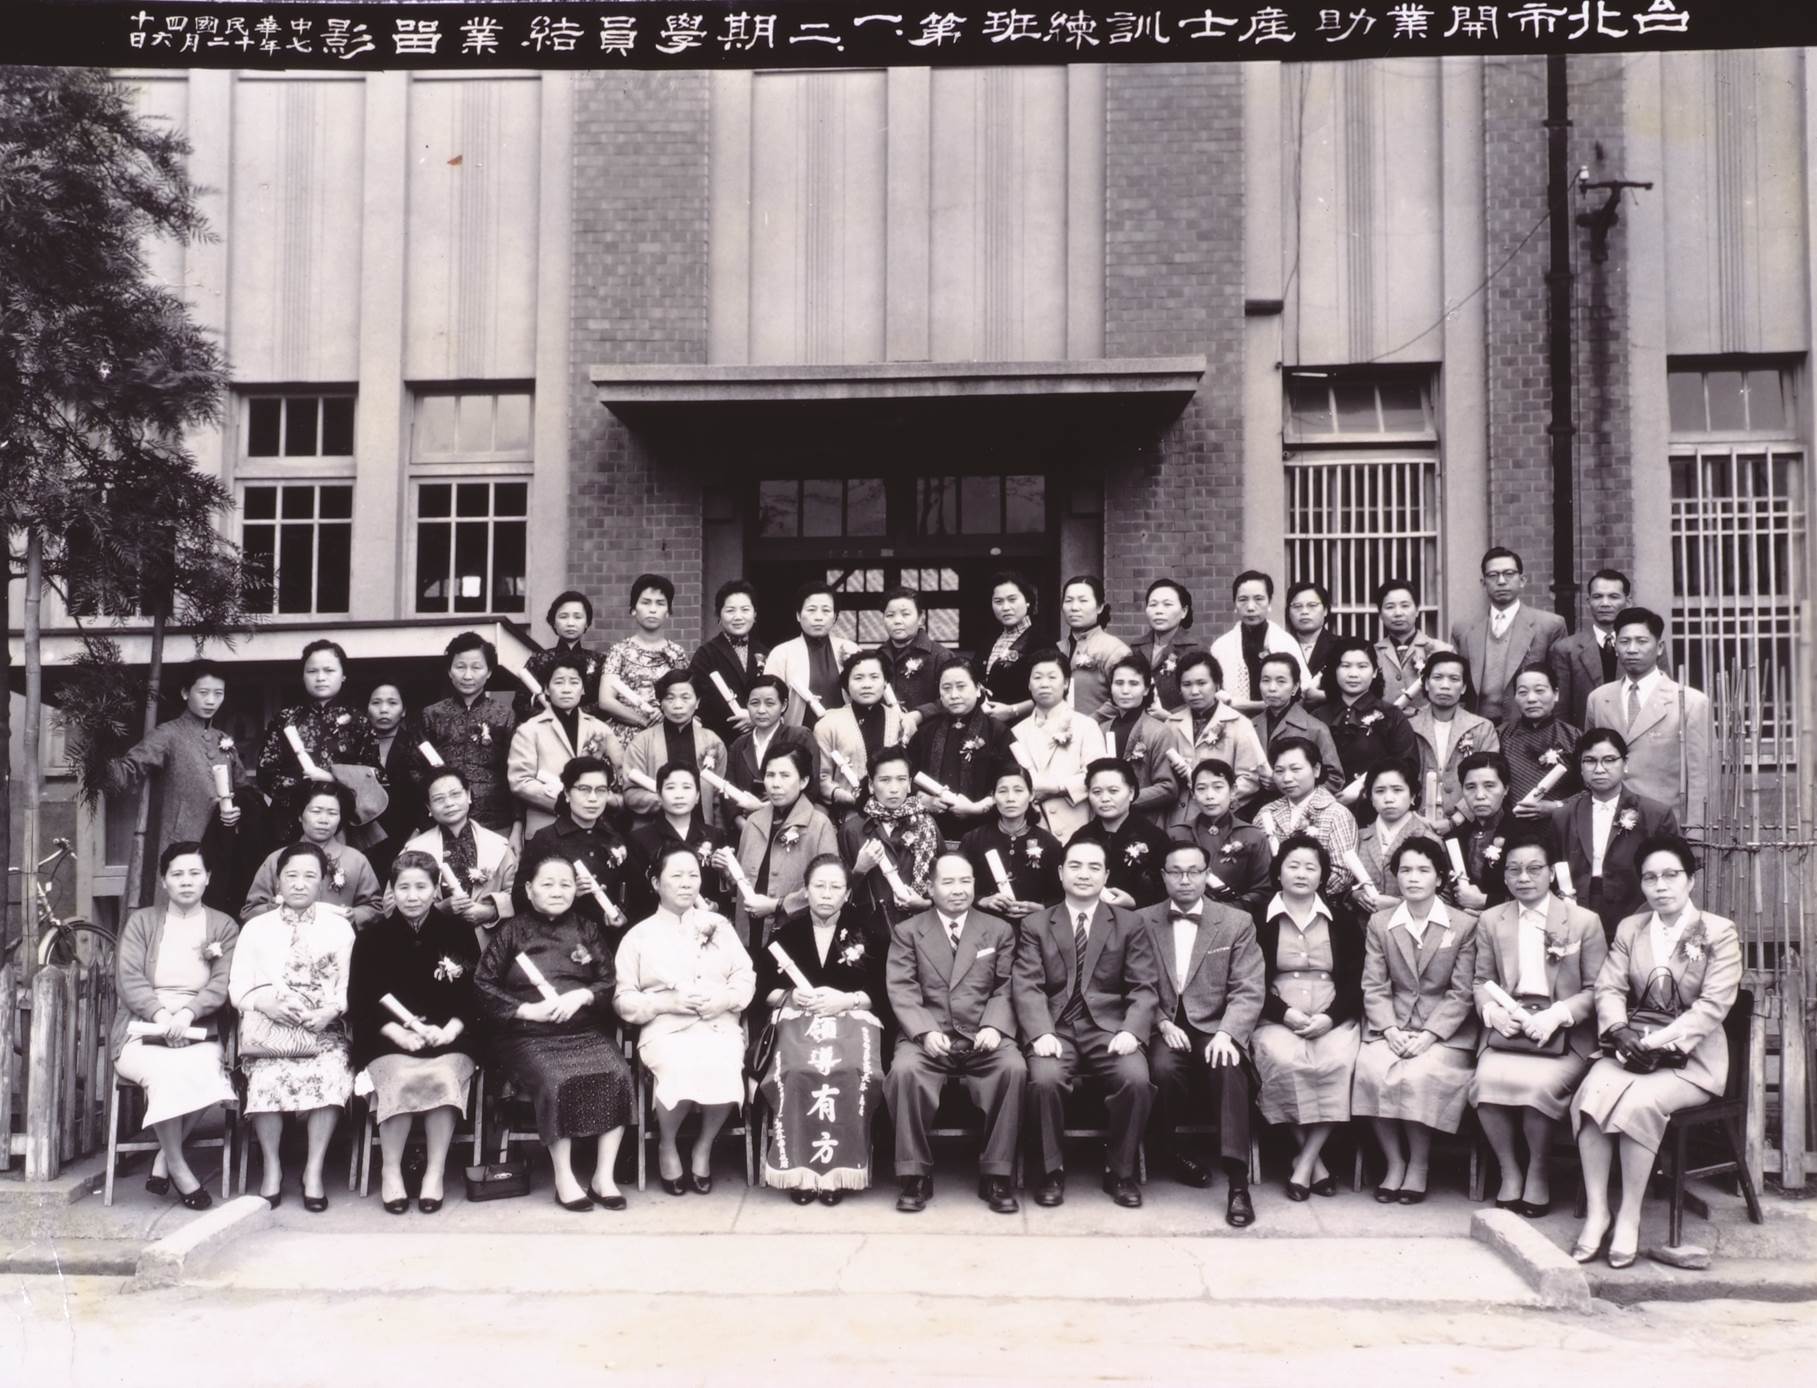 Establishment of the Department of Health, Taipei City Government, 1961